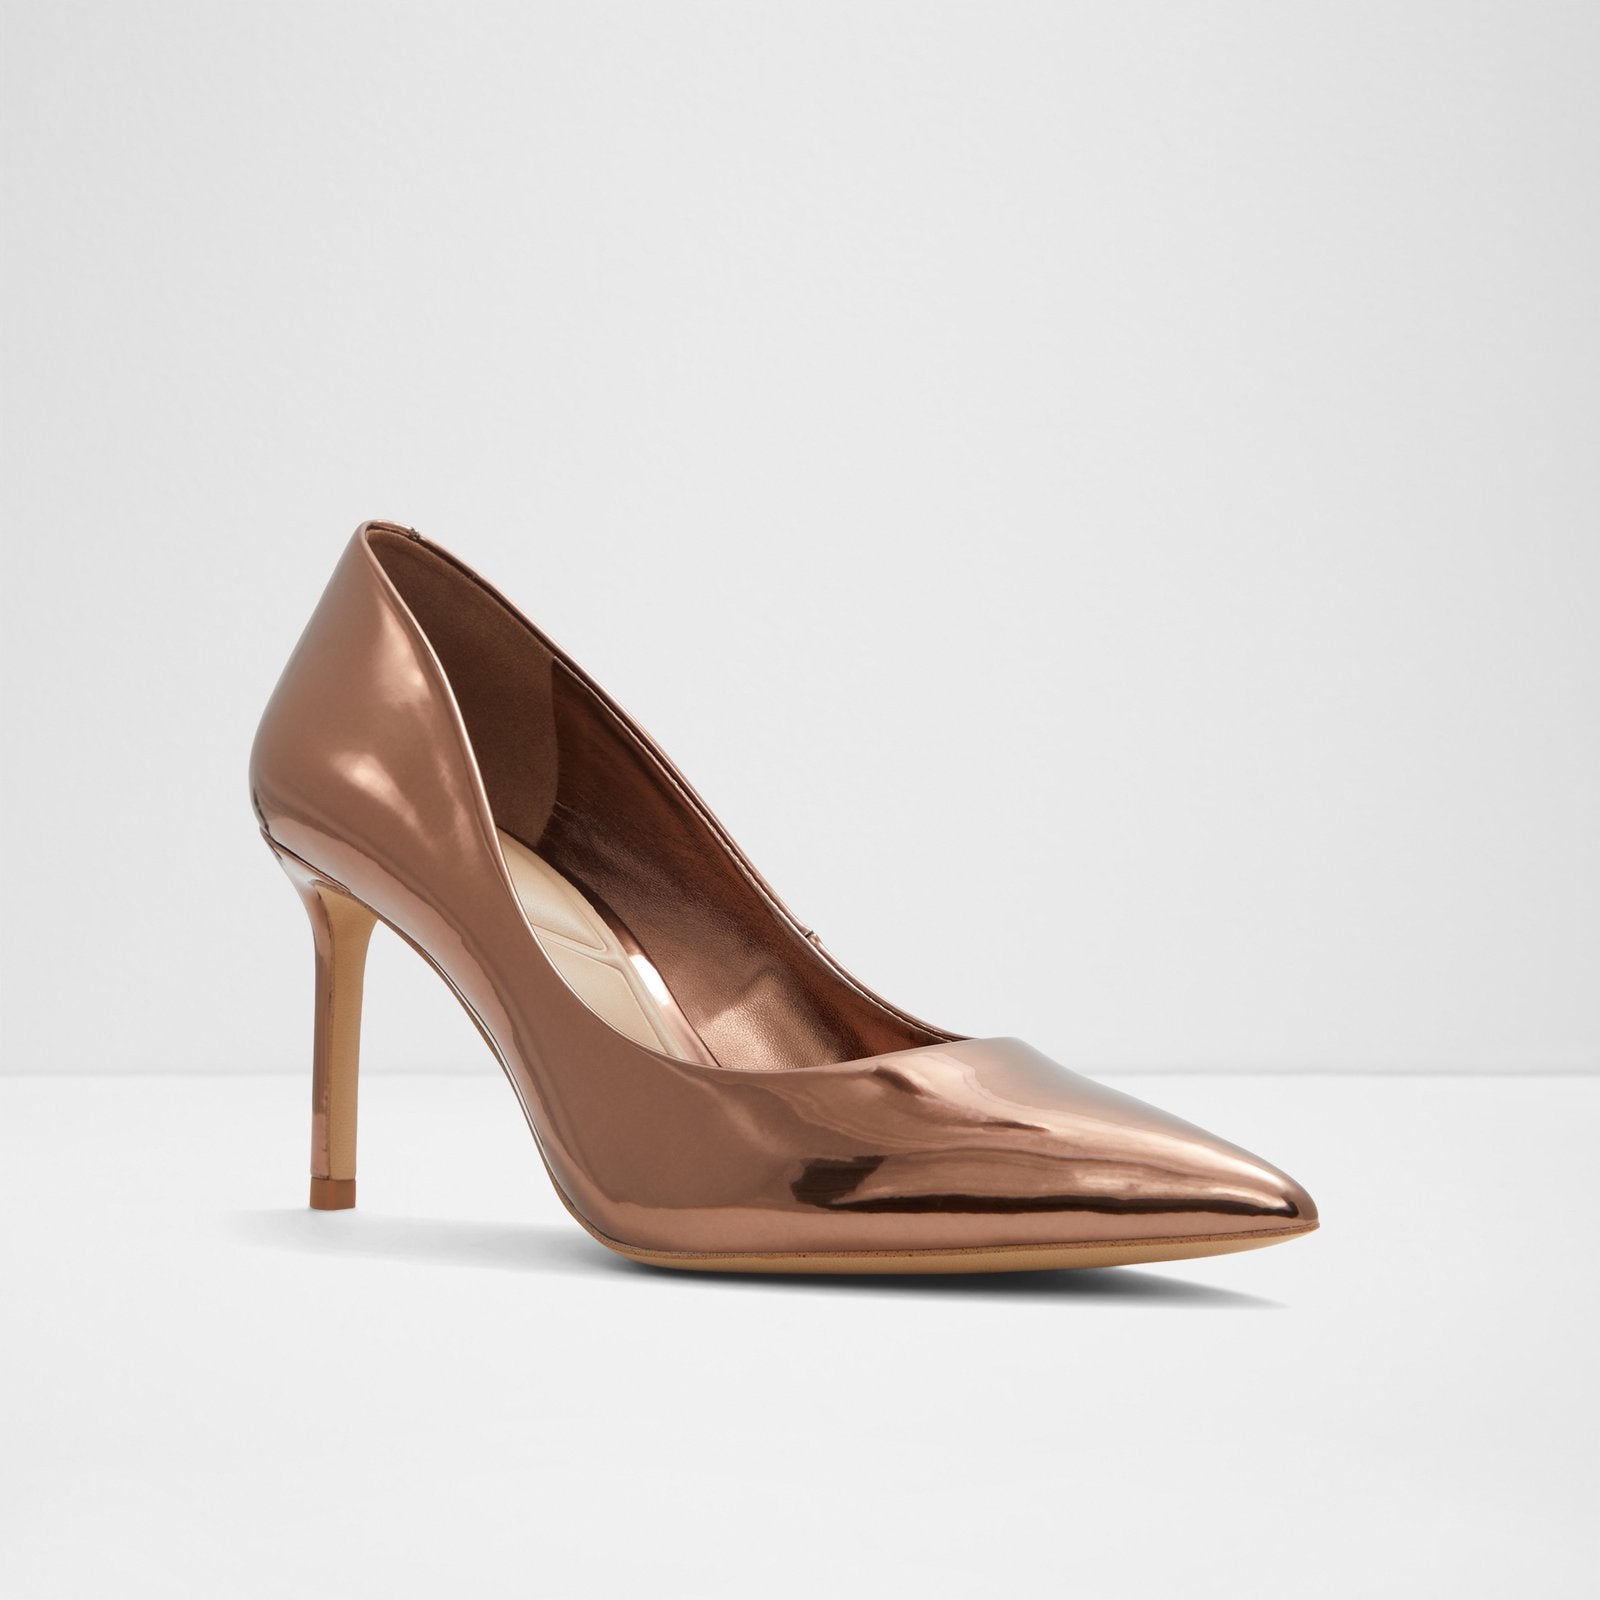 Stessymid / Heeled Women Shoes - Metallic Multi - ALDO KSA